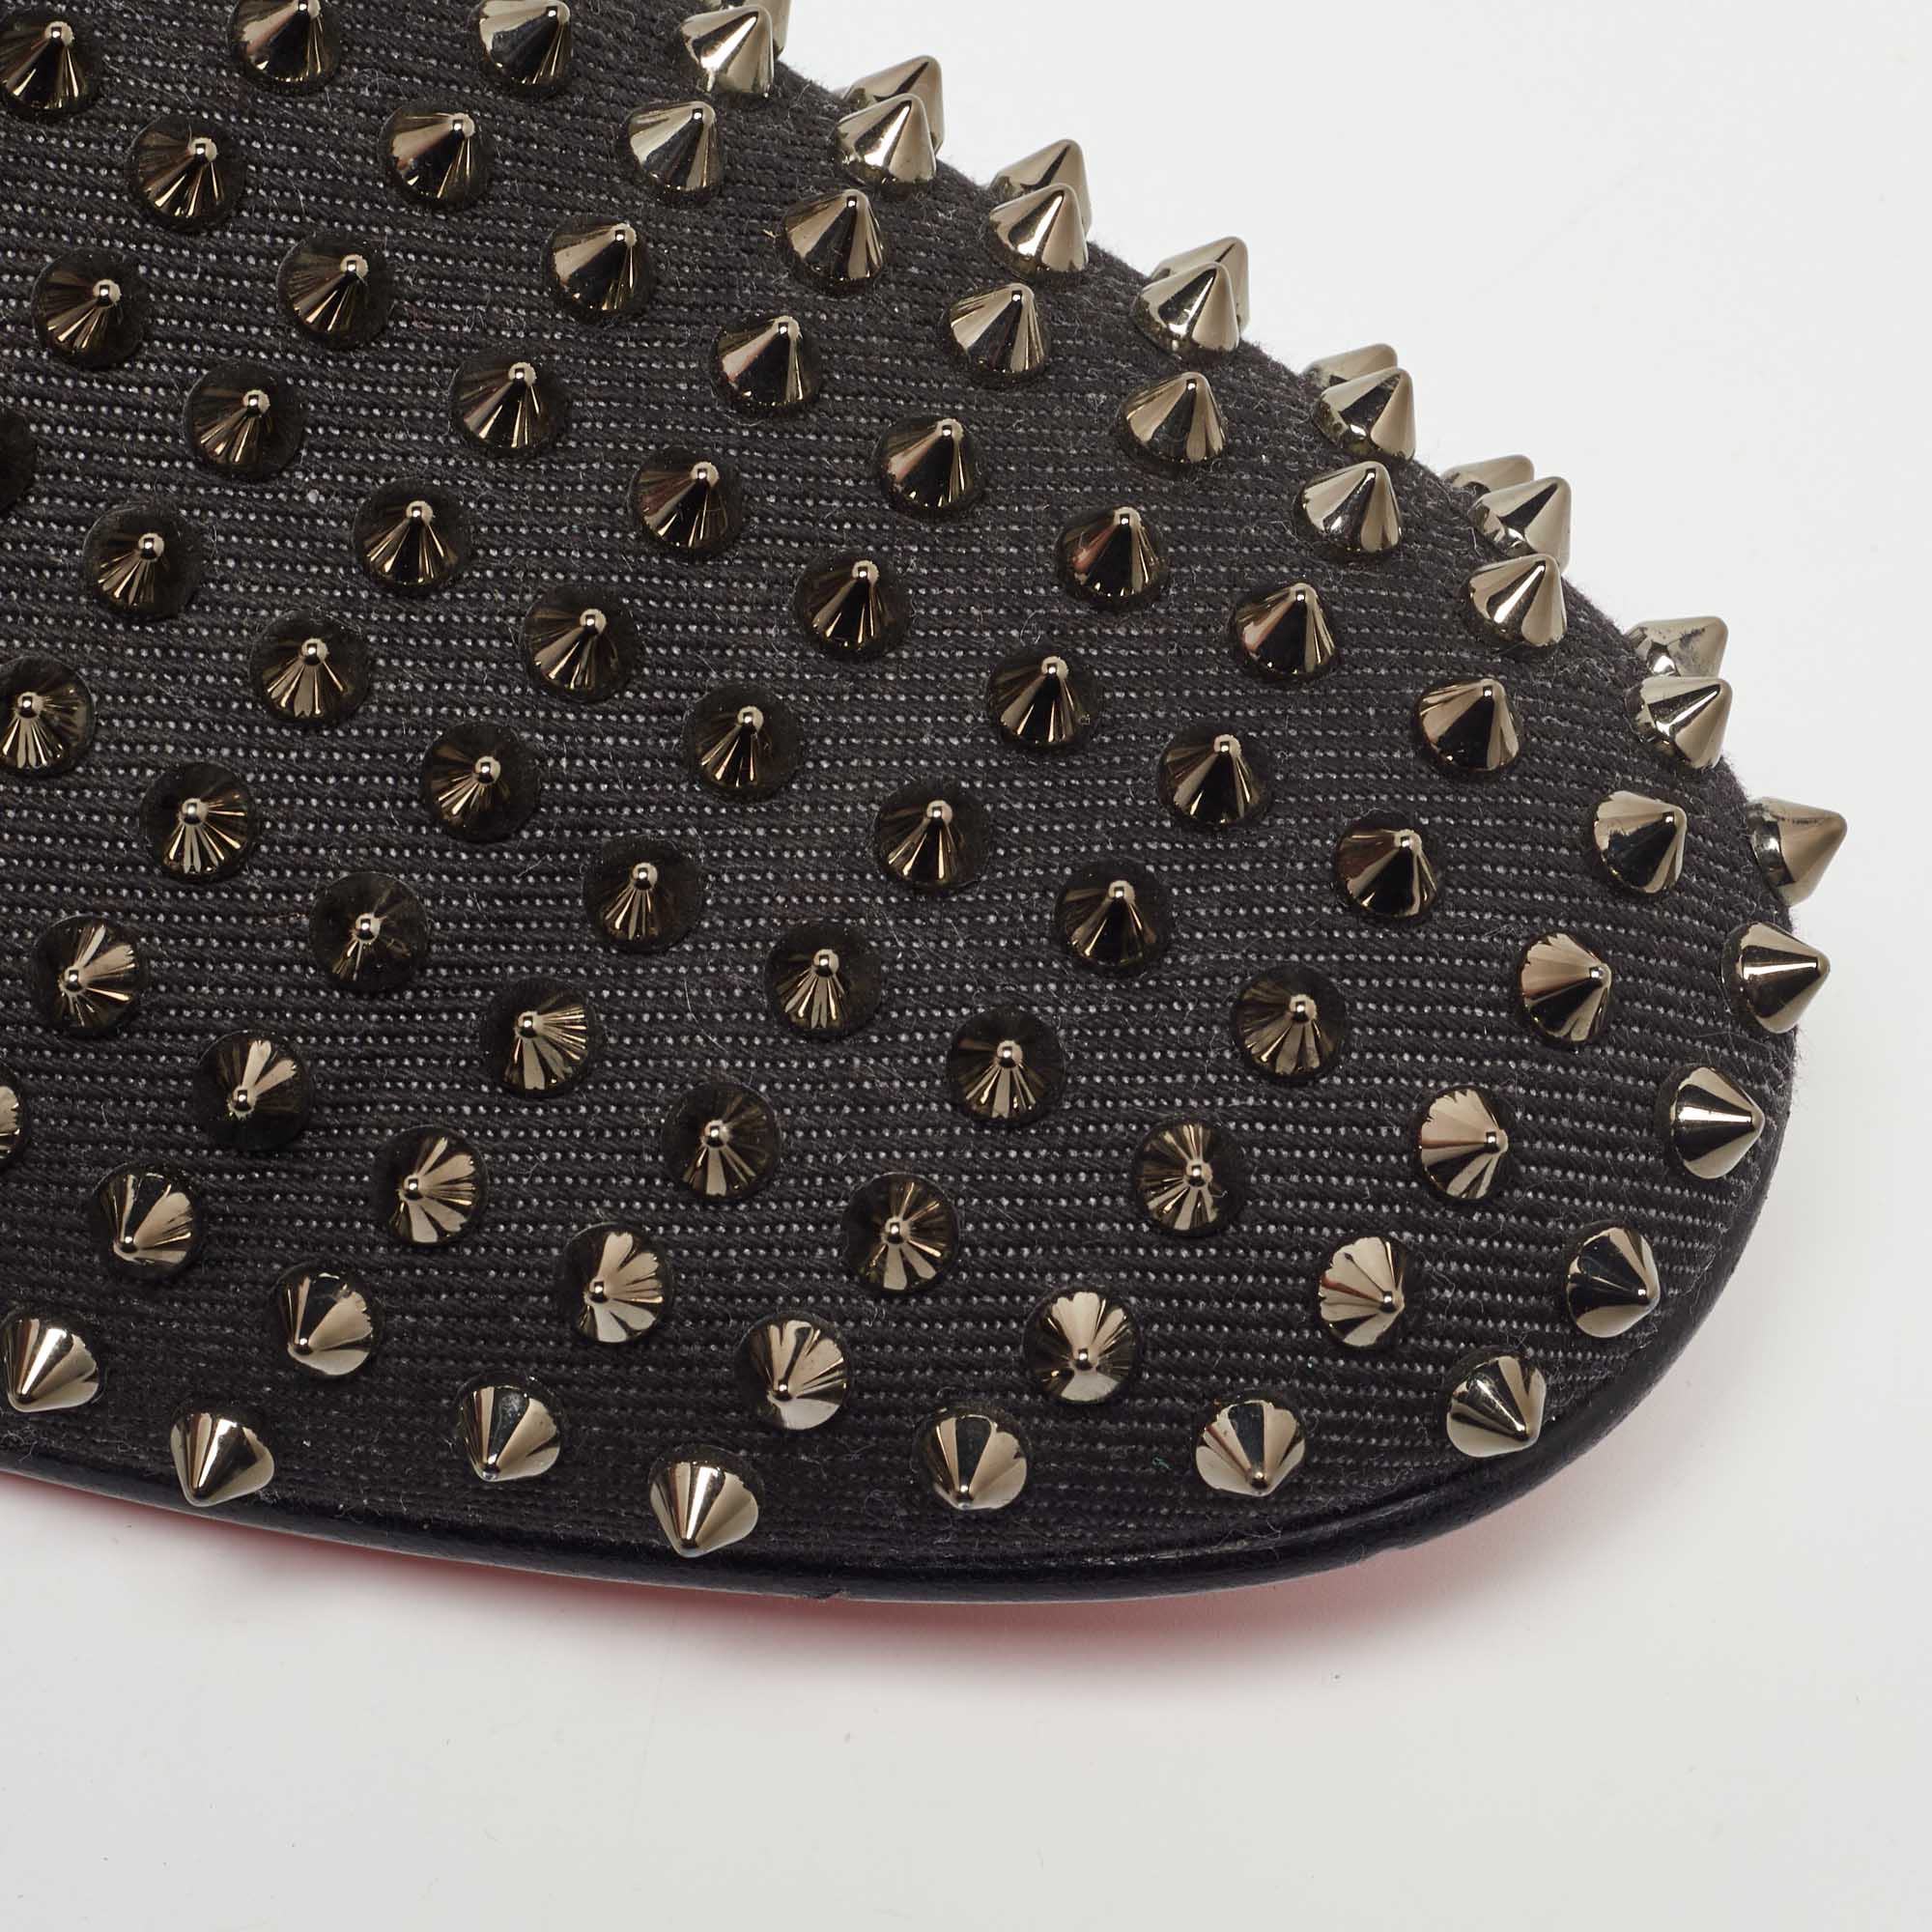 Christian Louboutin Black Denim Dandelion Spikes Loafers Size 43